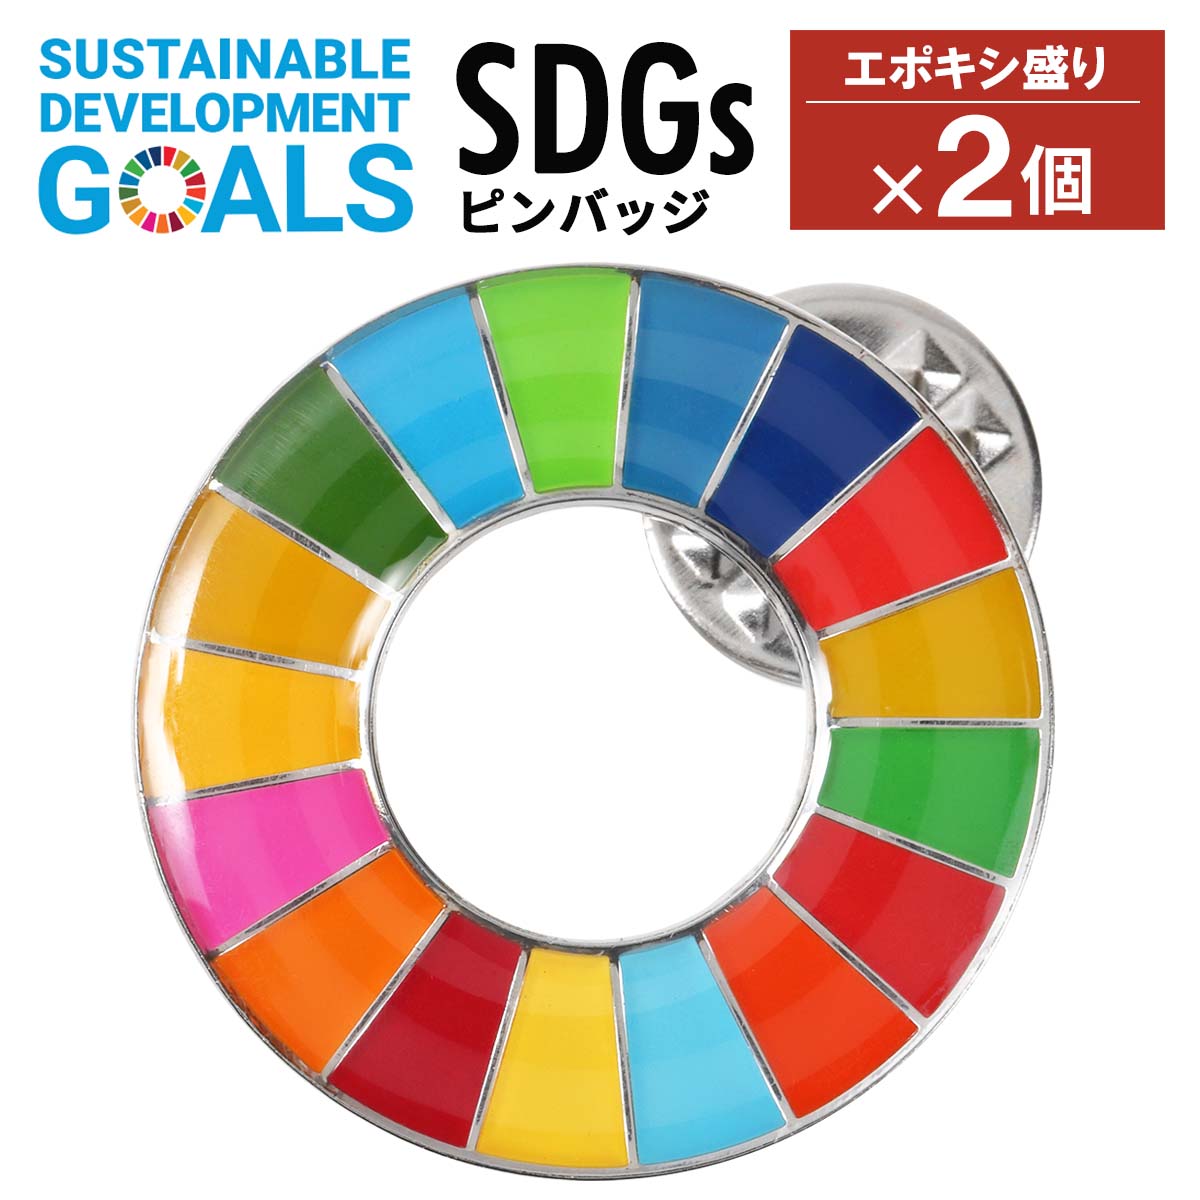  SDGs ピンバッジ 2個 国連本部公式最新仕様 25mm 20mm 小さめ SDGsバッジ 丸み サステナブル 17 目標 バッチ バッヂ sdgs 1000円ポッキリ